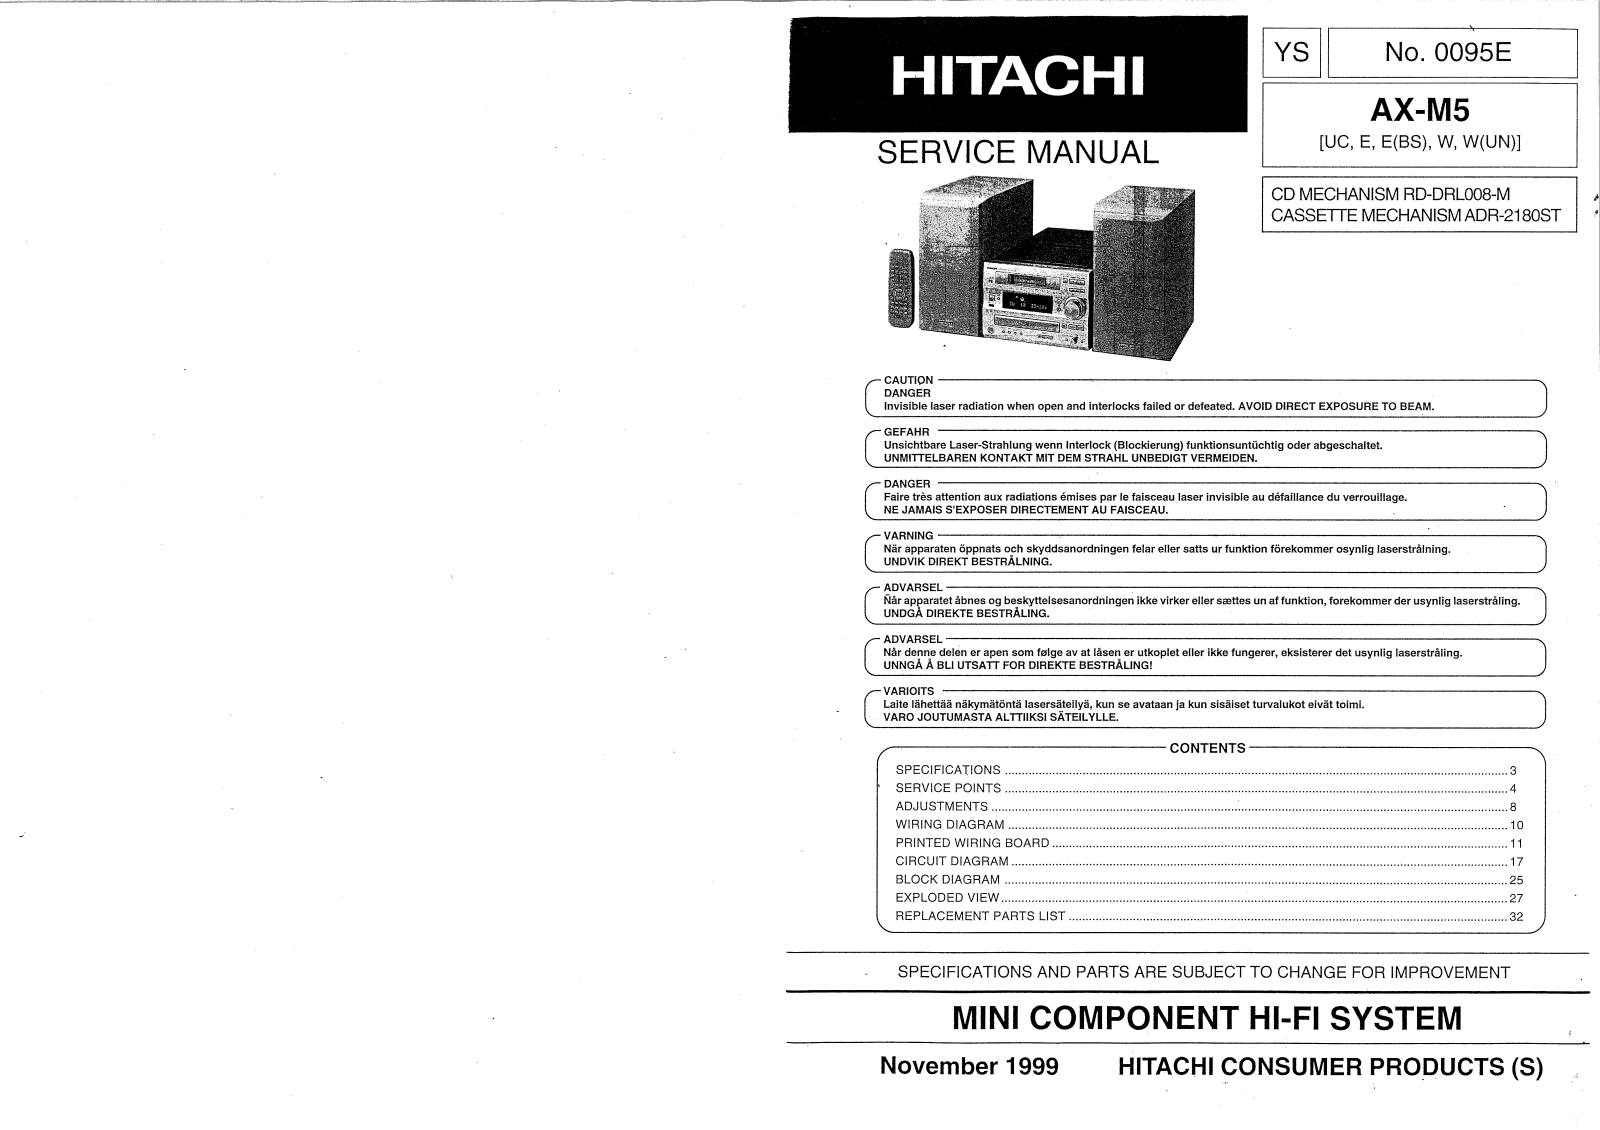 Hitachi AX-M5 Service Manual